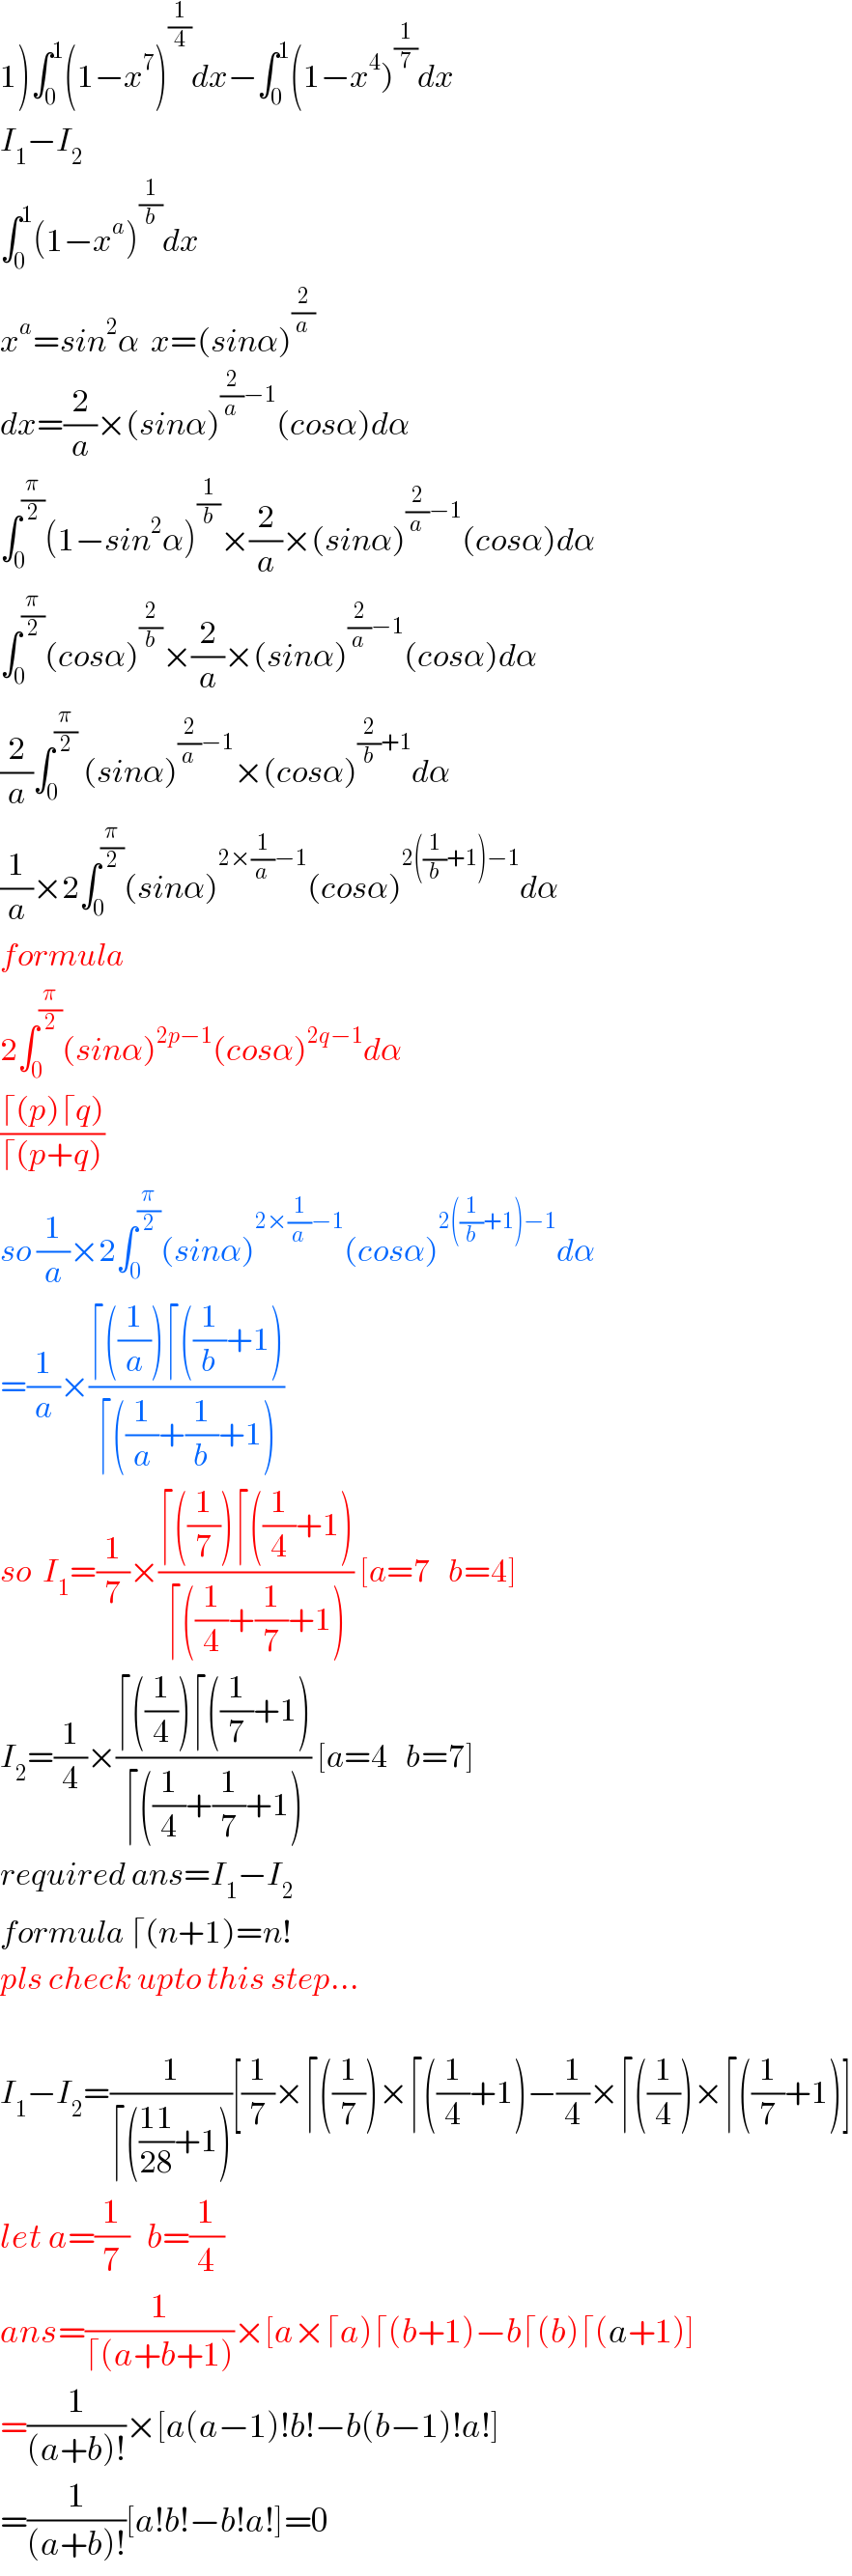 1)∫_0 ^1 (1−x^7 )^(1/4) dx−∫_0 ^1 (1−x^4 )^(1/7) dx  I_1 −I_2   ∫_0 ^1 (1−x^a )^(1/b) dx  x^a =sin^2 α  x=(sinα)^(2/a)   dx=(2/a)×(sinα)^((2/a)−1) (cosα)dα  ∫_0 ^(π/2) (1−sin^2 α)^(1/b) ×(2/a)×(sinα)^((2/a)−1) (cosα)dα  ∫_0 ^(π/2) (cosα)^(2/b) ×(2/a)×(sinα)^((2/a)−1) (cosα)dα  (2/a)∫_0 ^(π/2)  (sinα)^((2/a)−1) ×(cosα)^((2/b)+1) dα  (1/a)×2∫_0 ^(π/2) (sinα)^(2×(1/a)−1) (cosα)^(2((1/b)+1)−1) dα  formula  2∫_0 ^(π/2) (sinα)^(2p−1) (cosα)^(2q−1) dα  ((⌈(p)⌈q))/(⌈(p+q)))  so (1/a)×2∫_0 ^(π/2) (sinα)^(2×(1/a)−1) (cosα)^(2((1/b)+1)−1) dα  =(1/a)×((⌈((1/a))⌈((1/b)+1))/(⌈((1/a)+(1/b)+1)))  so  I_1 =(1/7)×((⌈((1/7))⌈((1/4)+1))/(⌈((1/4)+(1/7)+1))) [a=7   b=4]  I_2 =(1/4)×((⌈((1/4))⌈((1/7)+1))/(⌈((1/4)+(1/7)+1))) [a=4   b=7]  required ans=I_1 −I_2   formula ⌈(n+1)=n!  pls check upto this step...    I_1 −I_2 =(1/(⌈(((11)/(28))+1)))[(1/7)×⌈((1/7))×⌈((1/4)+1)−(1/4)×⌈((1/4))×⌈((1/7)+1)]  let a=(1/7)   b=(1/4)  ans=(1/(⌈(a+b+1)))×[a×⌈a)⌈(b+1)−b⌈(b)⌈(a+1)]  =(1/((a+b)!))×[a(a−1)!b!−b(b−1)!a!]  =(1/((a+b)!))[a!b!−b!a!]=0  